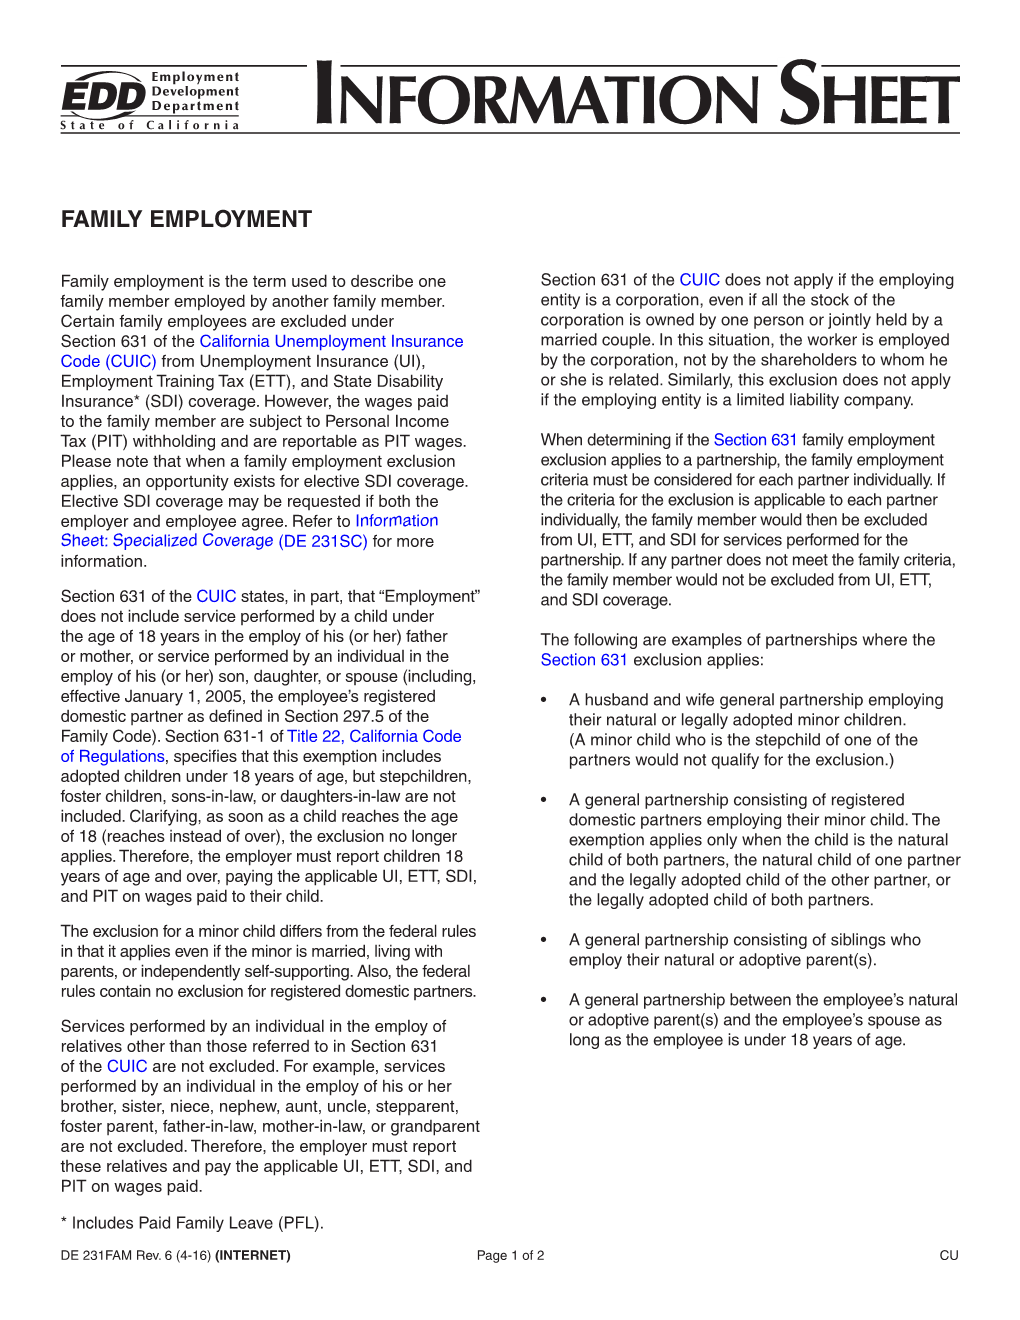 Family Employment (DE 231FAM)